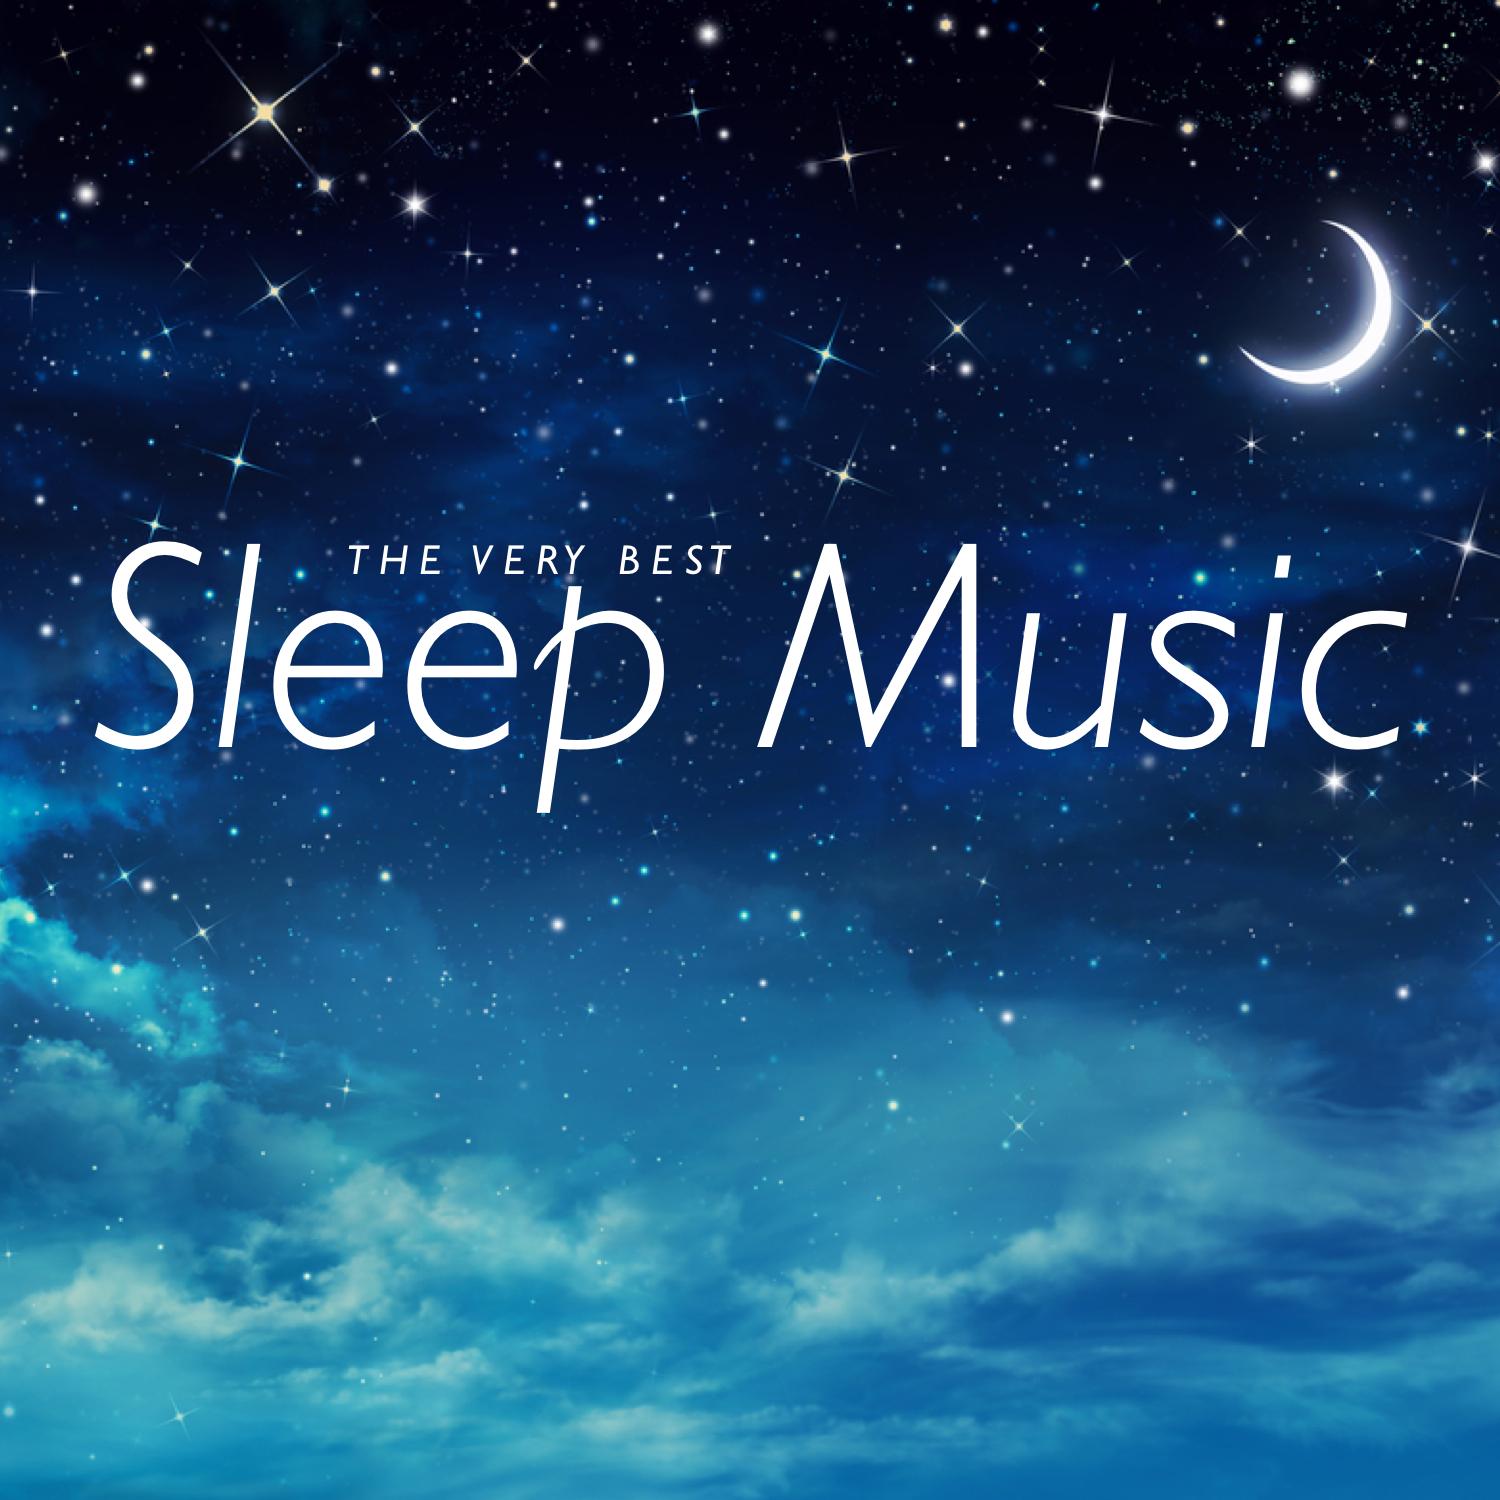 The Very Best Sleep Music